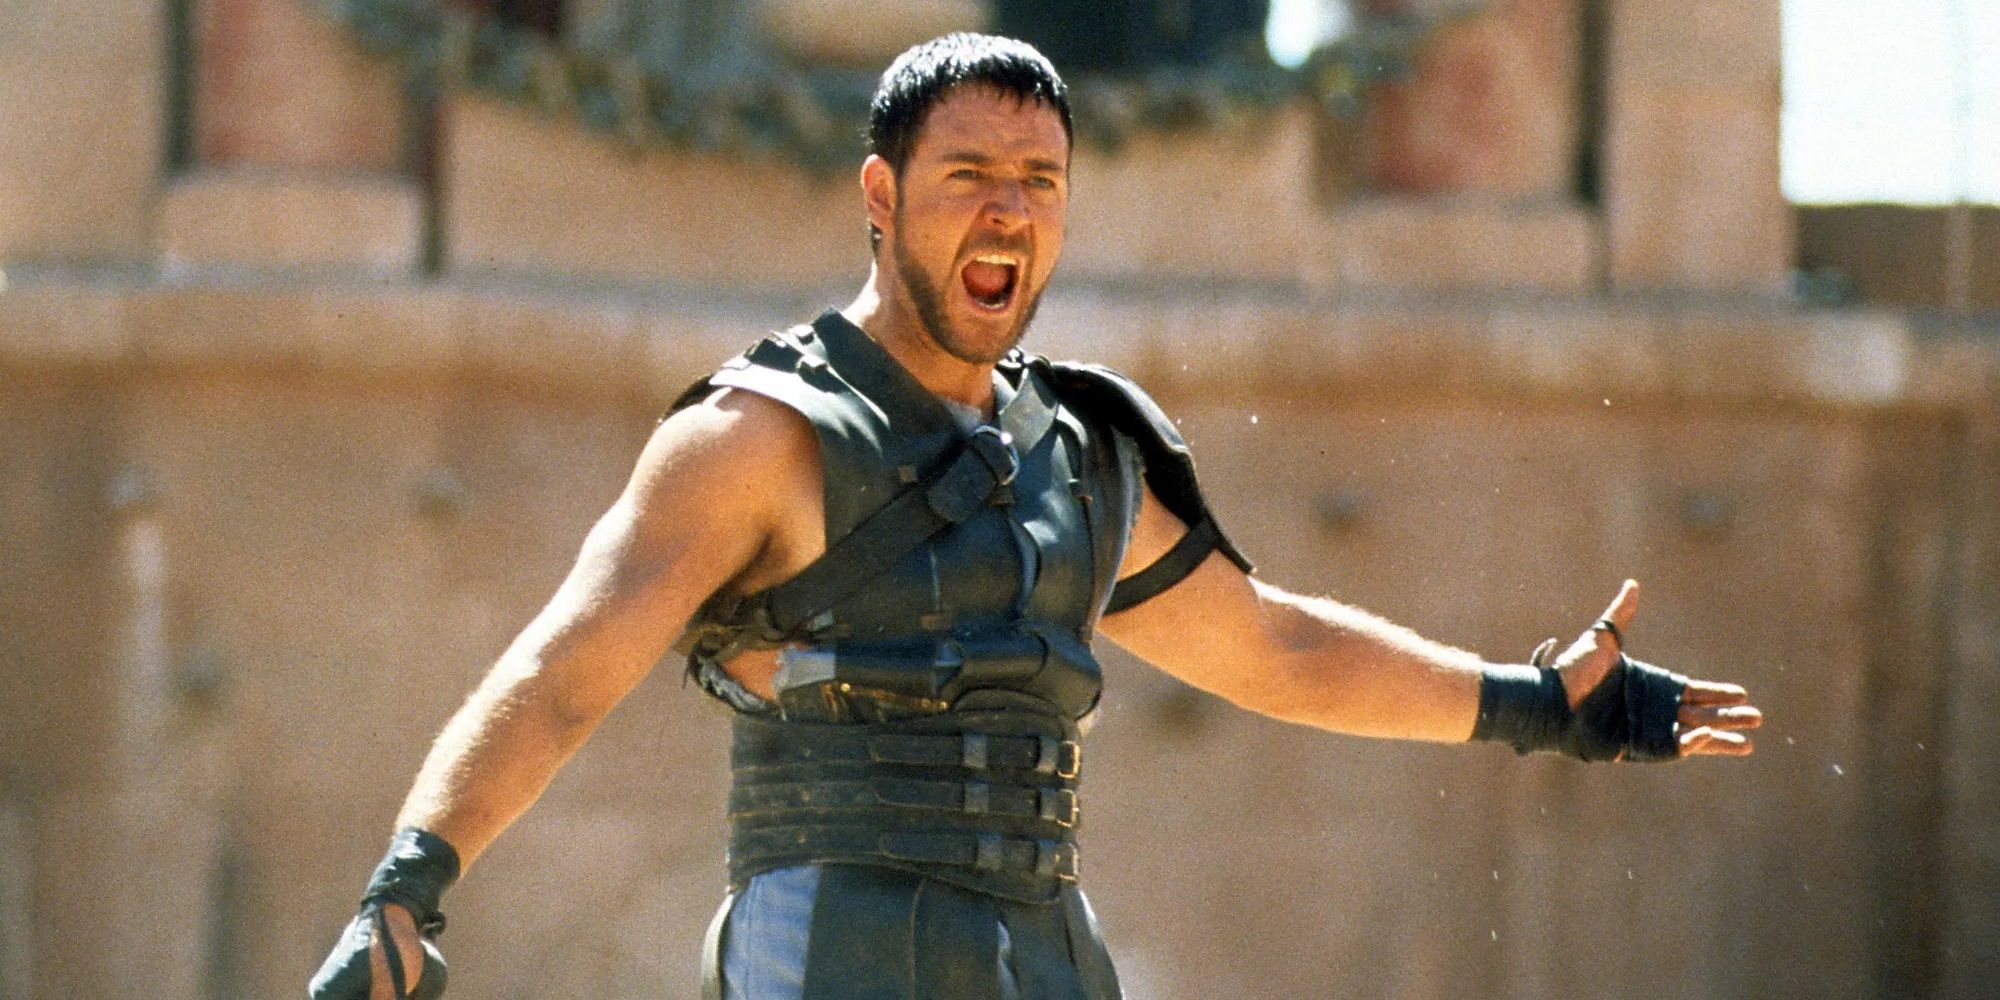 Maximus in the arena in Gladiator